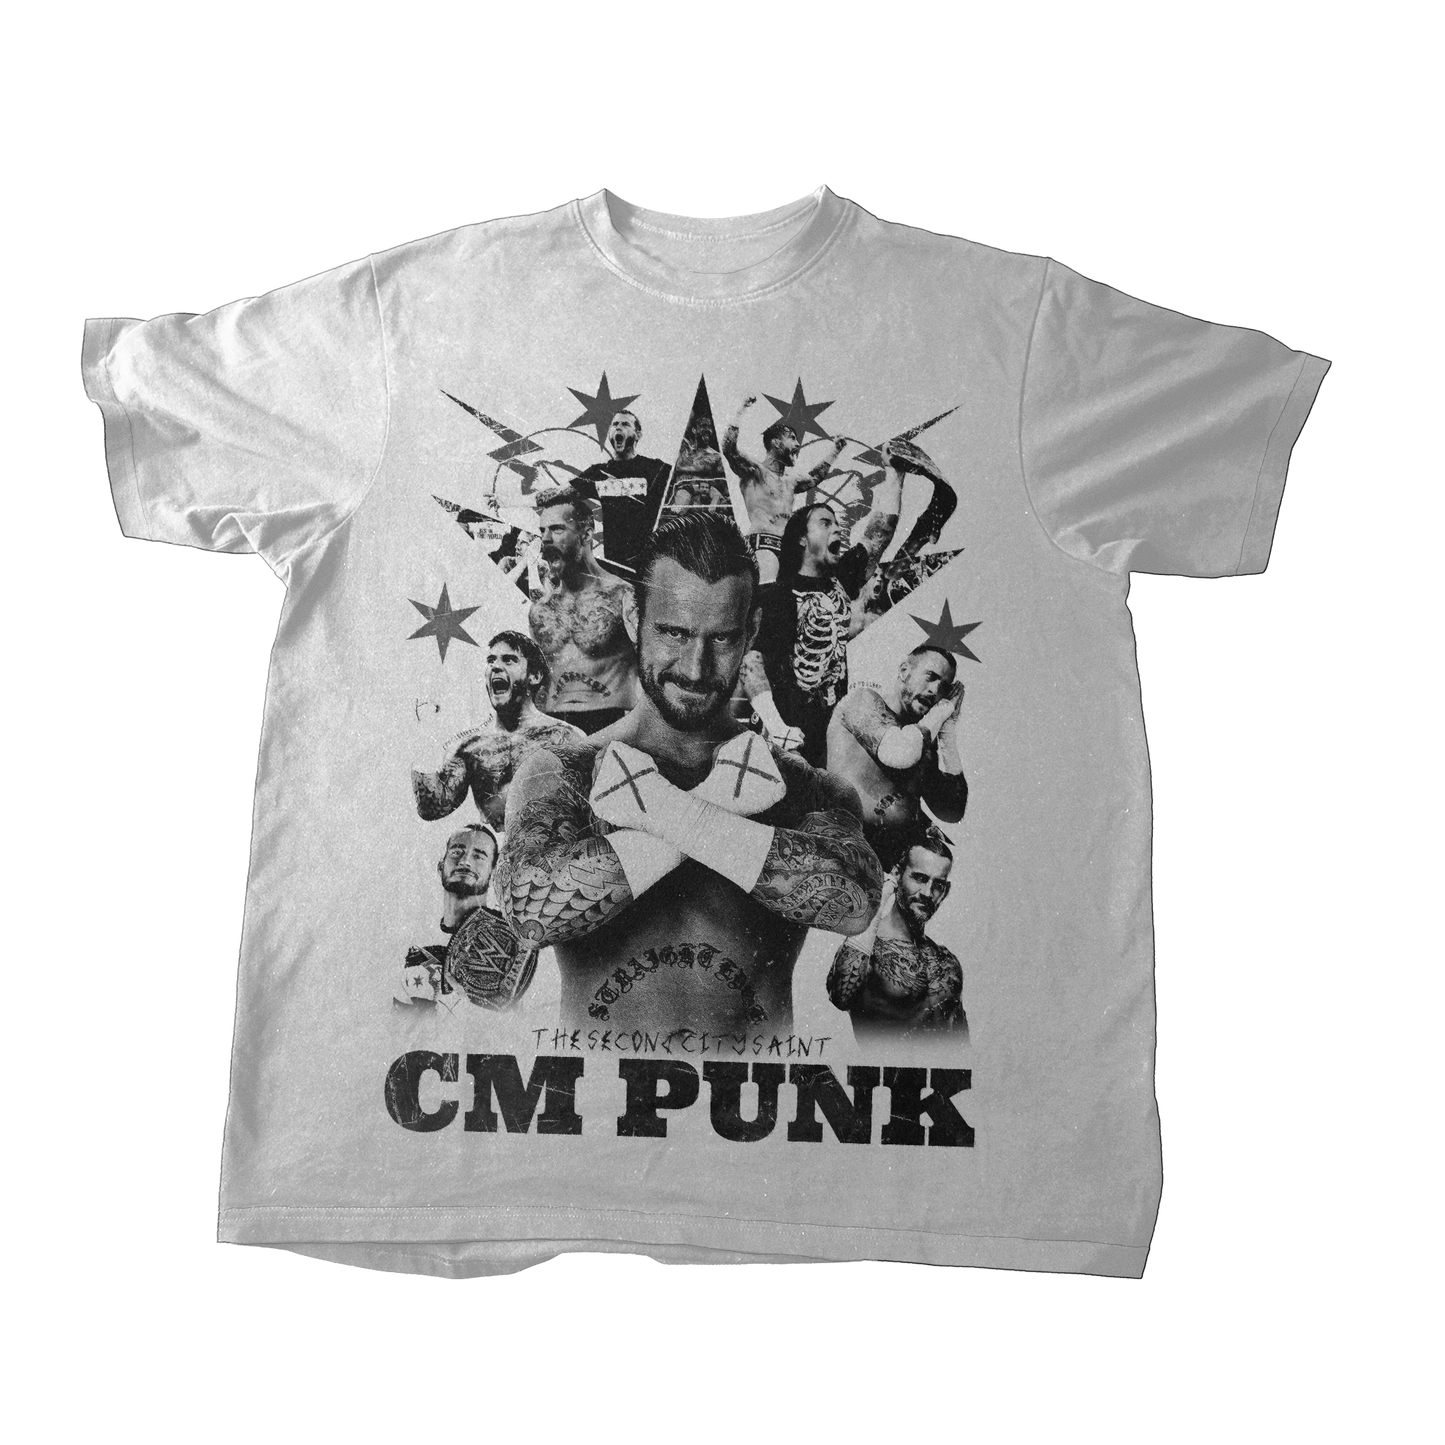 CM Punk "Best in the World!" W & B